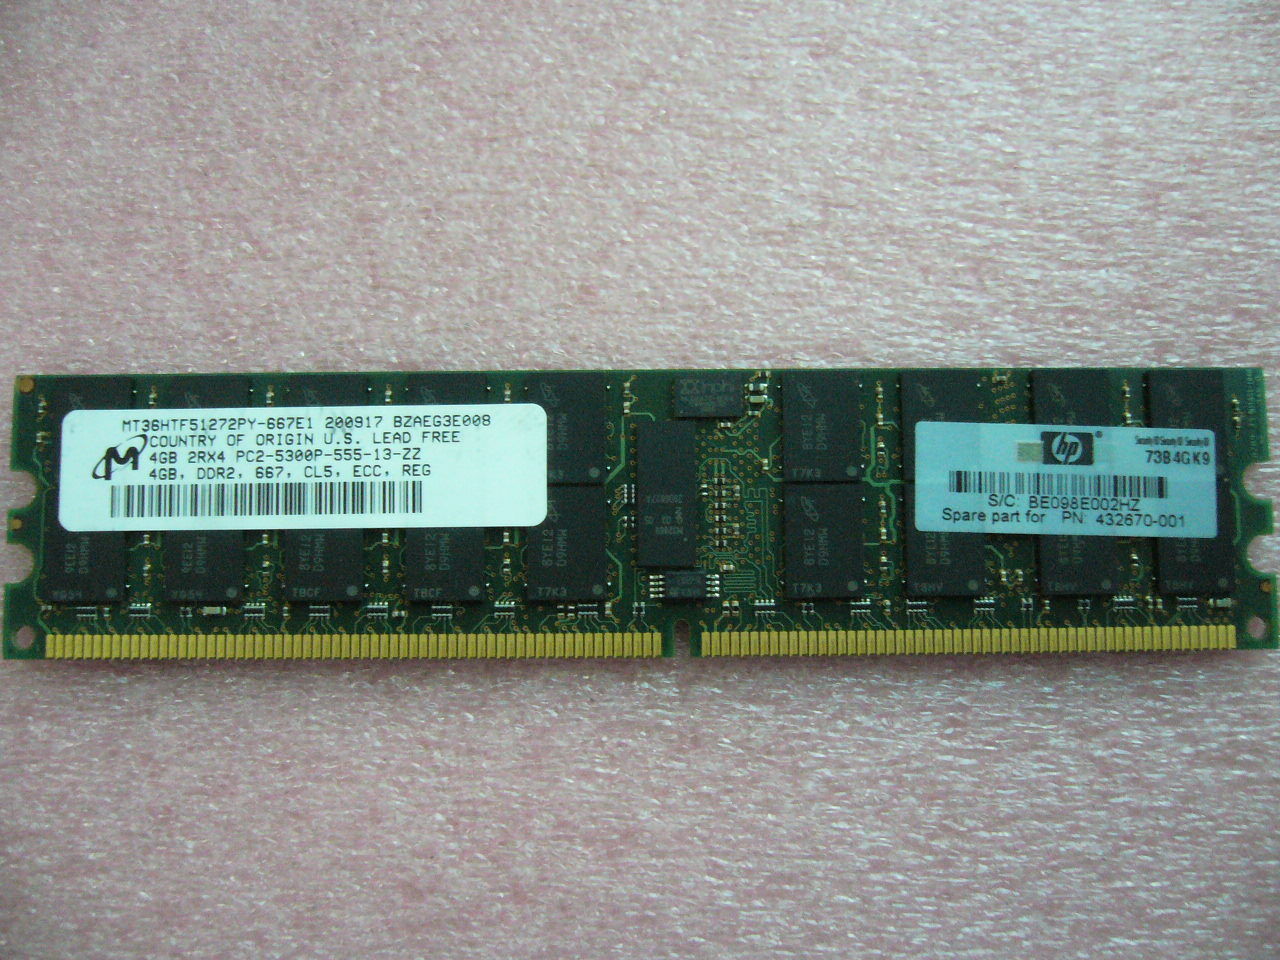 QTY 1x 4GB PC2-5300P 2Rx4 DDR2 667MHz ECC Registered Memory HP P/N 432670-001 - Click Image to Close